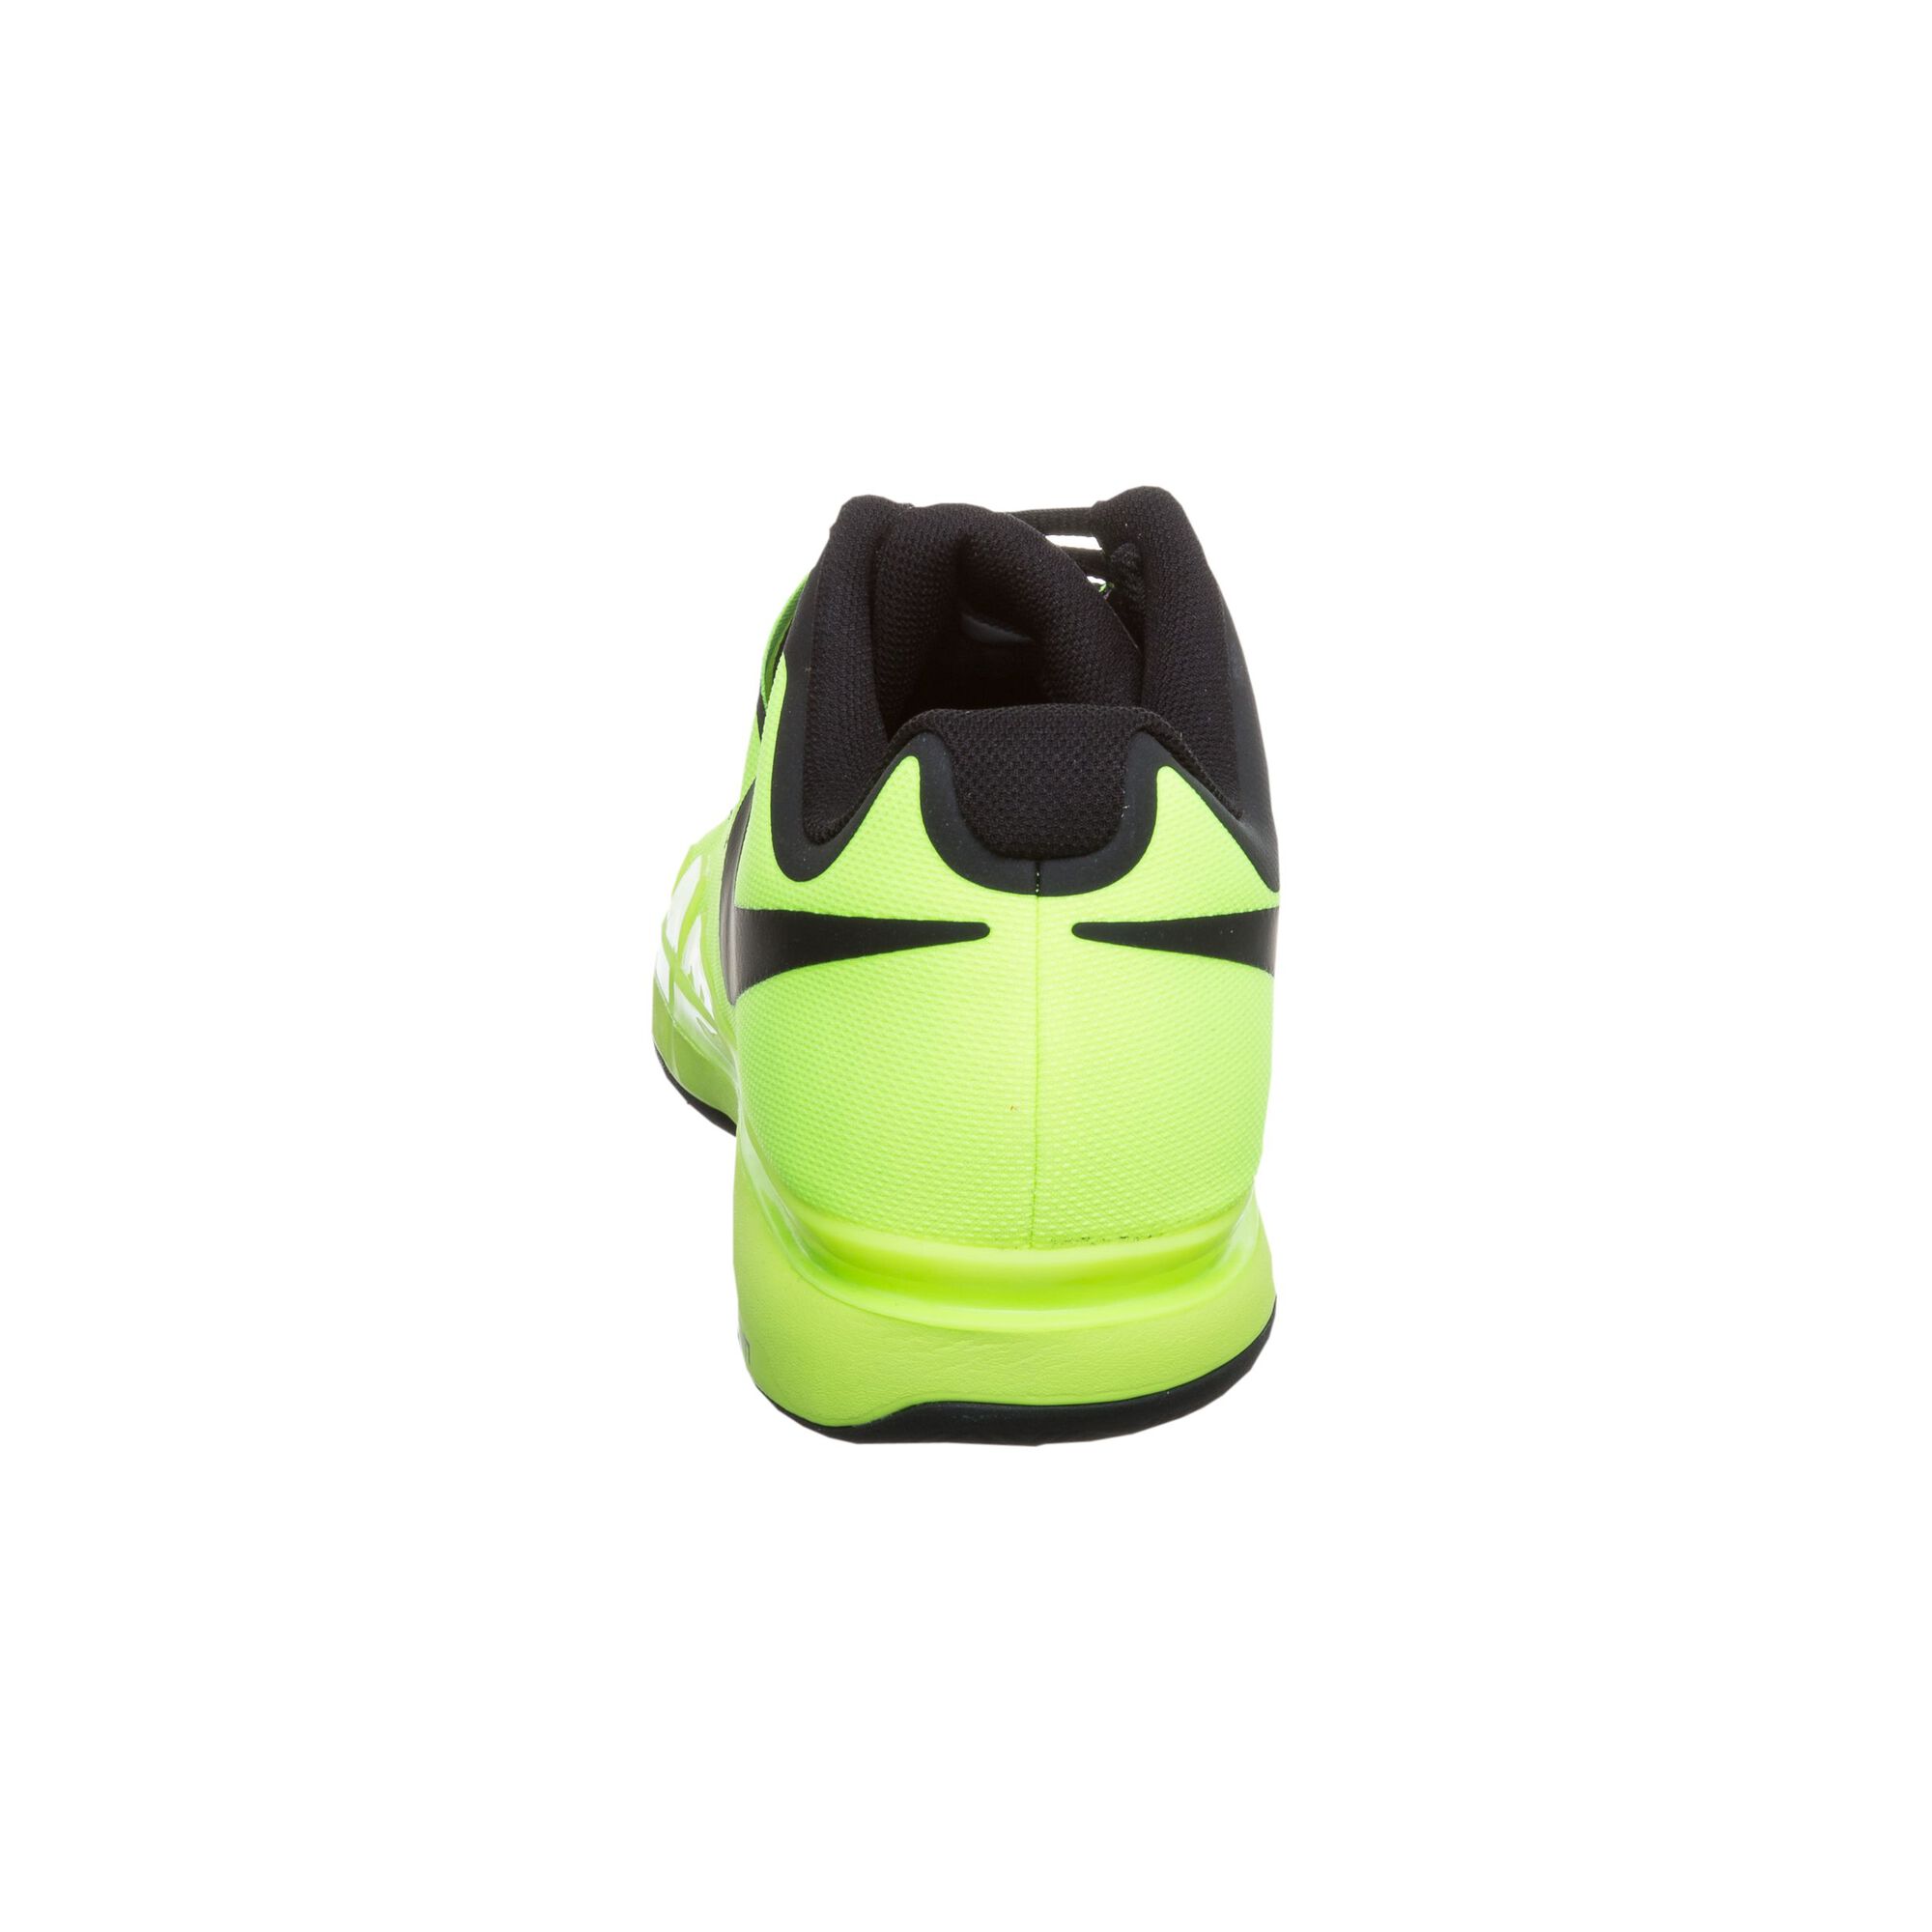 Inhalen hybride Zweet buy Nike Roger Federer Zoom Vapor 9.5 Tour Clay Court Shoe Men - Neon  Yellow, Black online | Tennis-Point